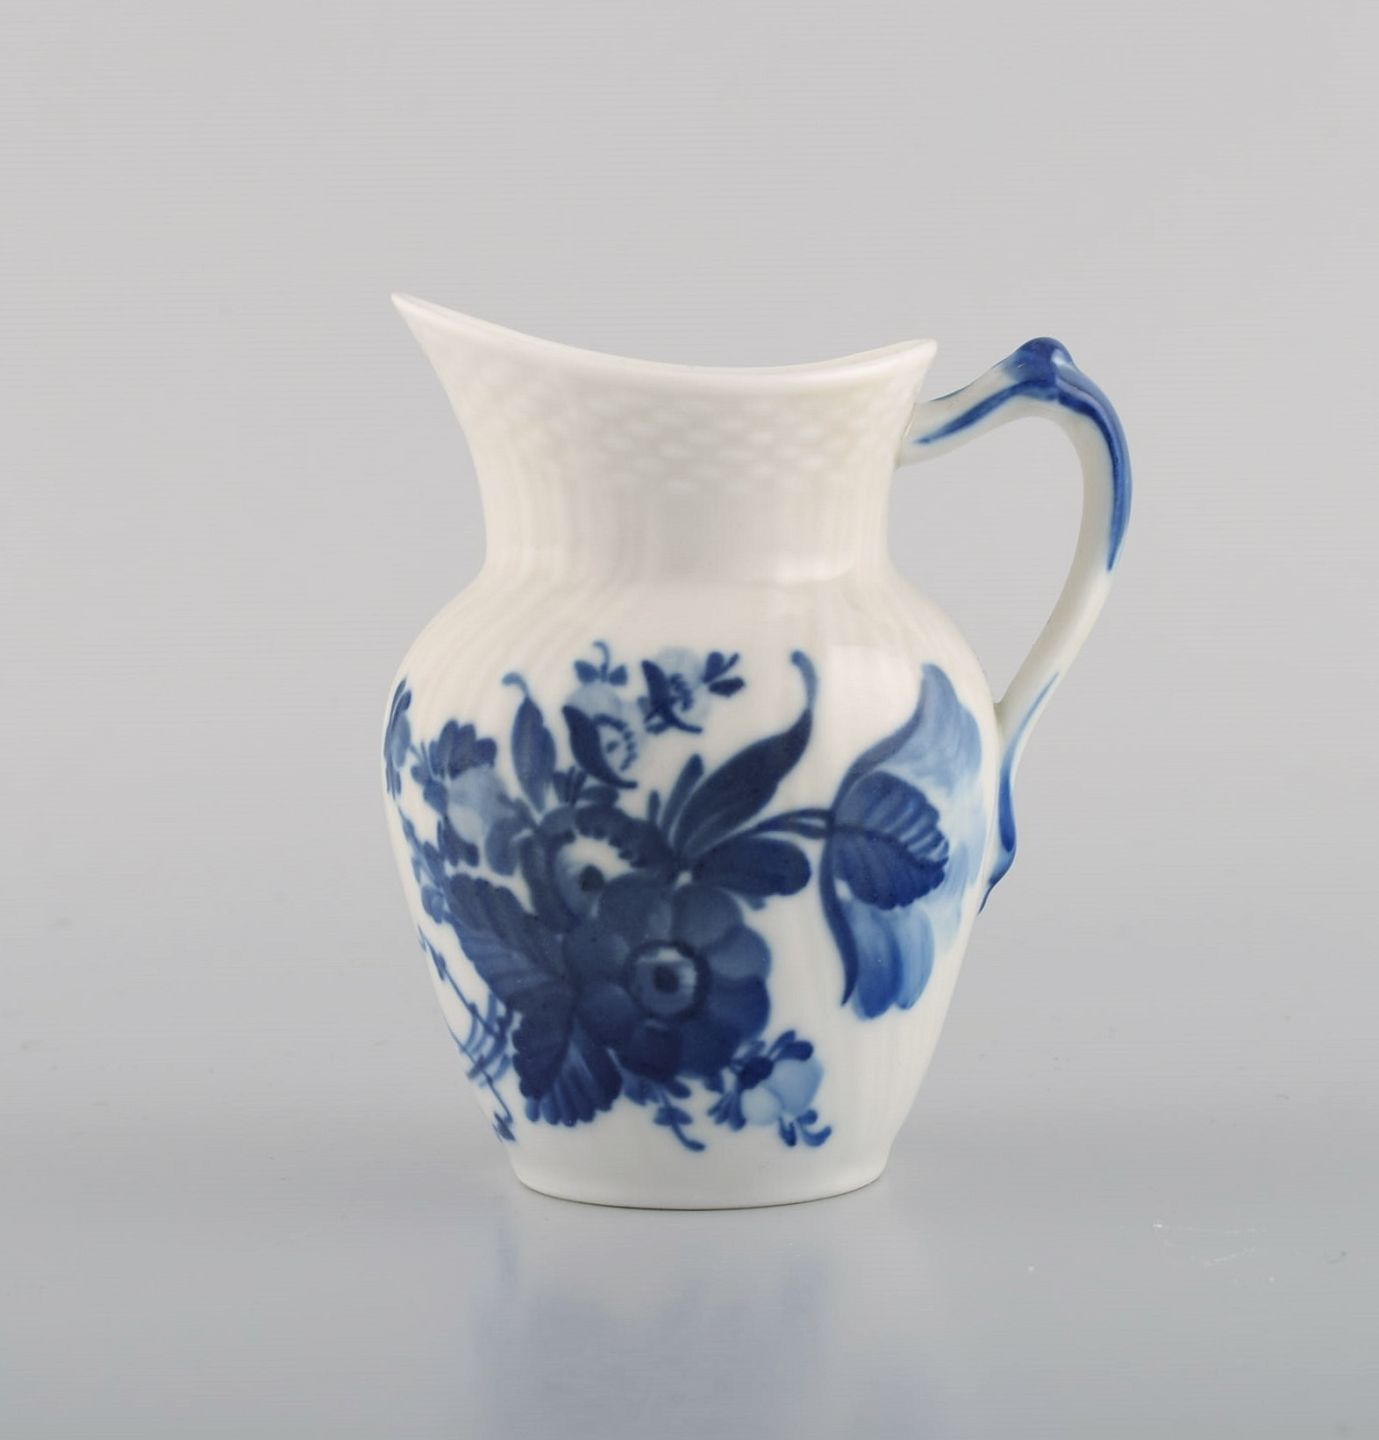 L Art - Royal Copenhagen Blue Flower Braided cream jug. Model number